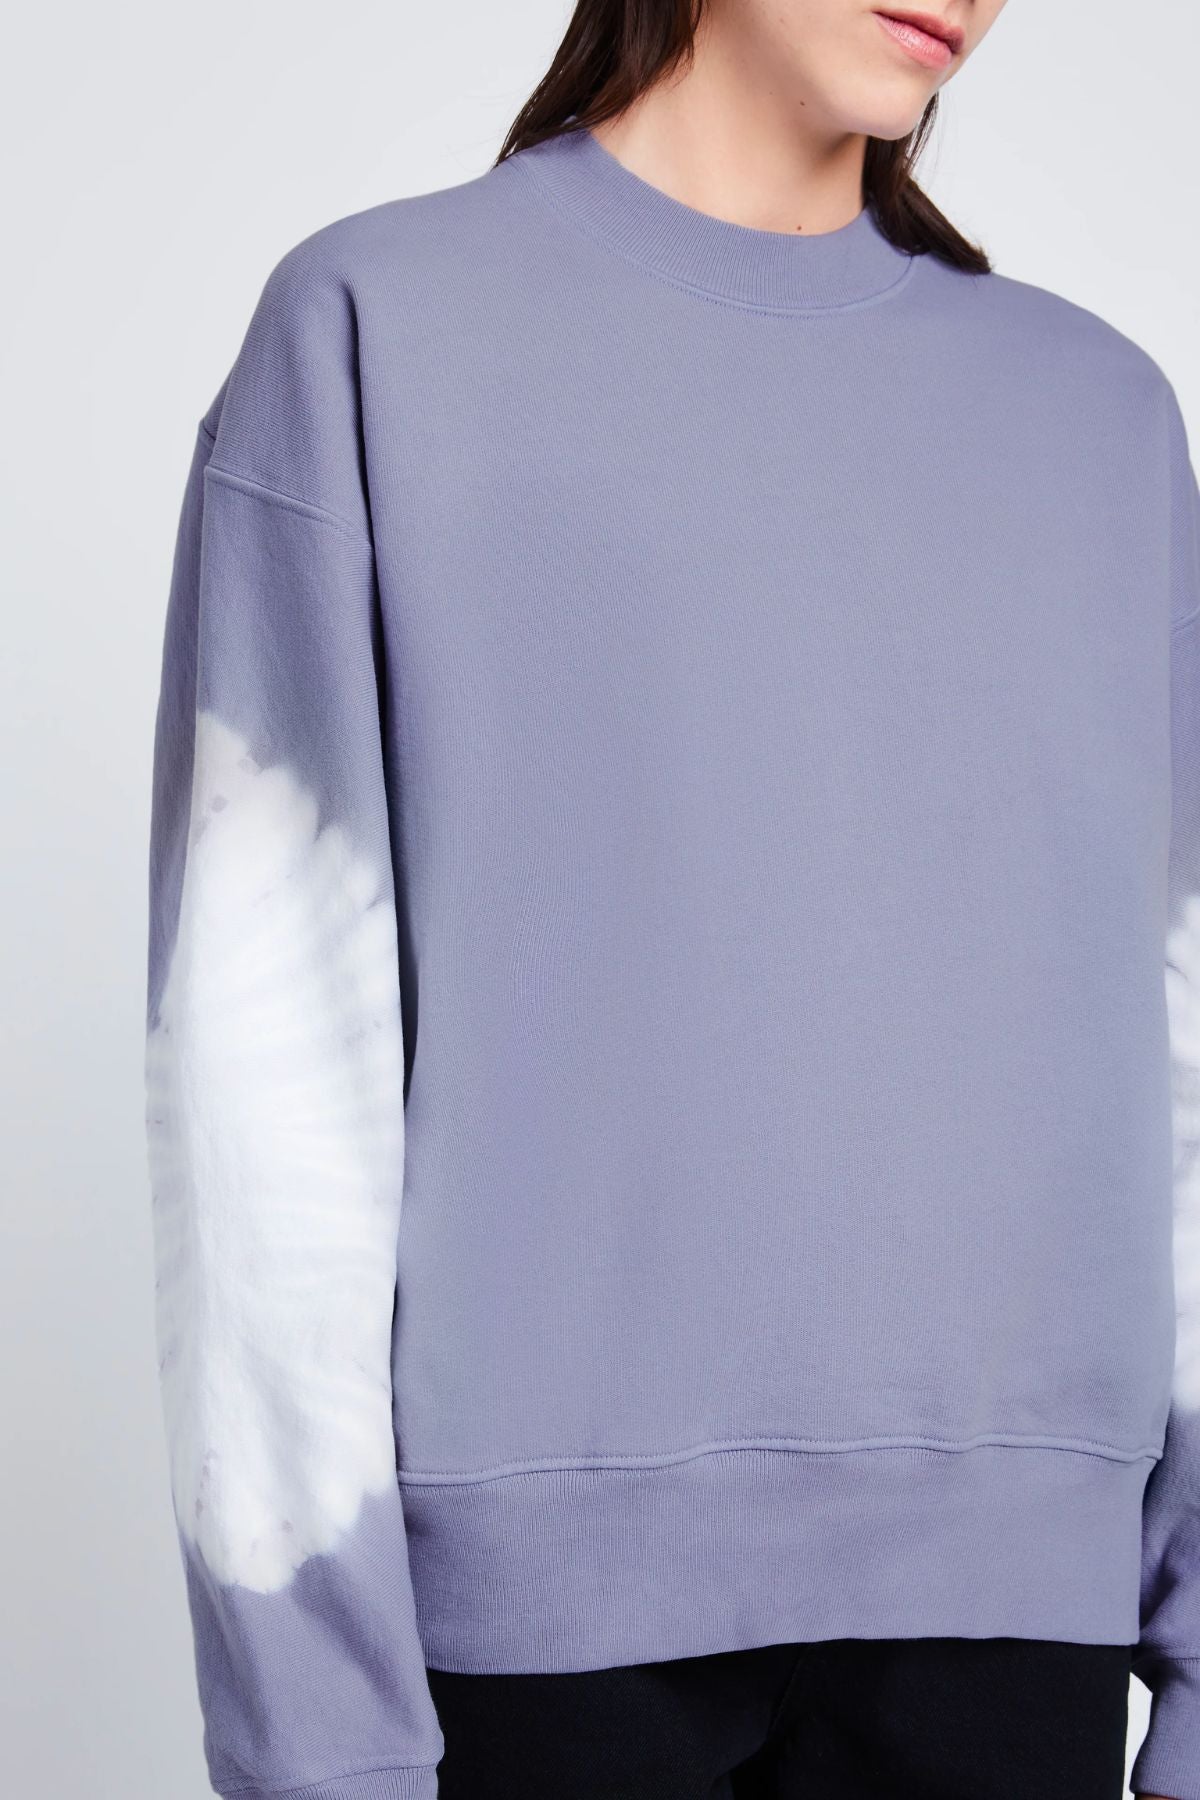 Proenza Schouler White Label Ring Tie Dye Sweatshirt - Lilac/ Off White